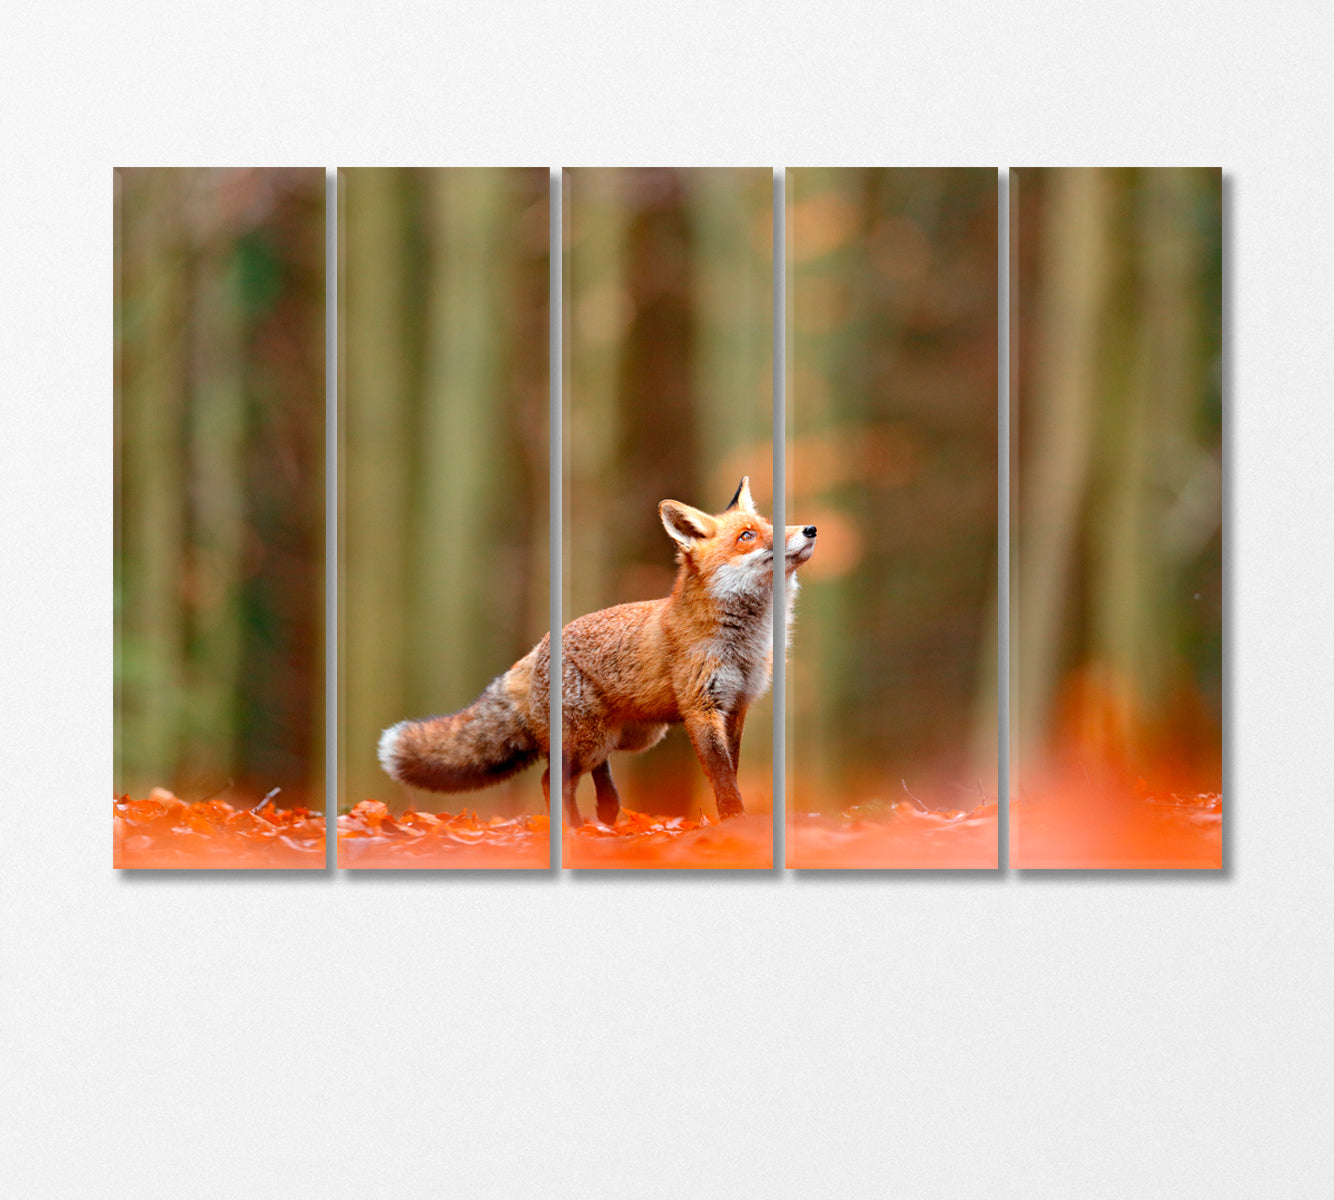 Red Fox Running in Orange Autumn Leaves Canvas Print-Canvas Print-CetArt-5 Panels-36x24 inches-CetArt